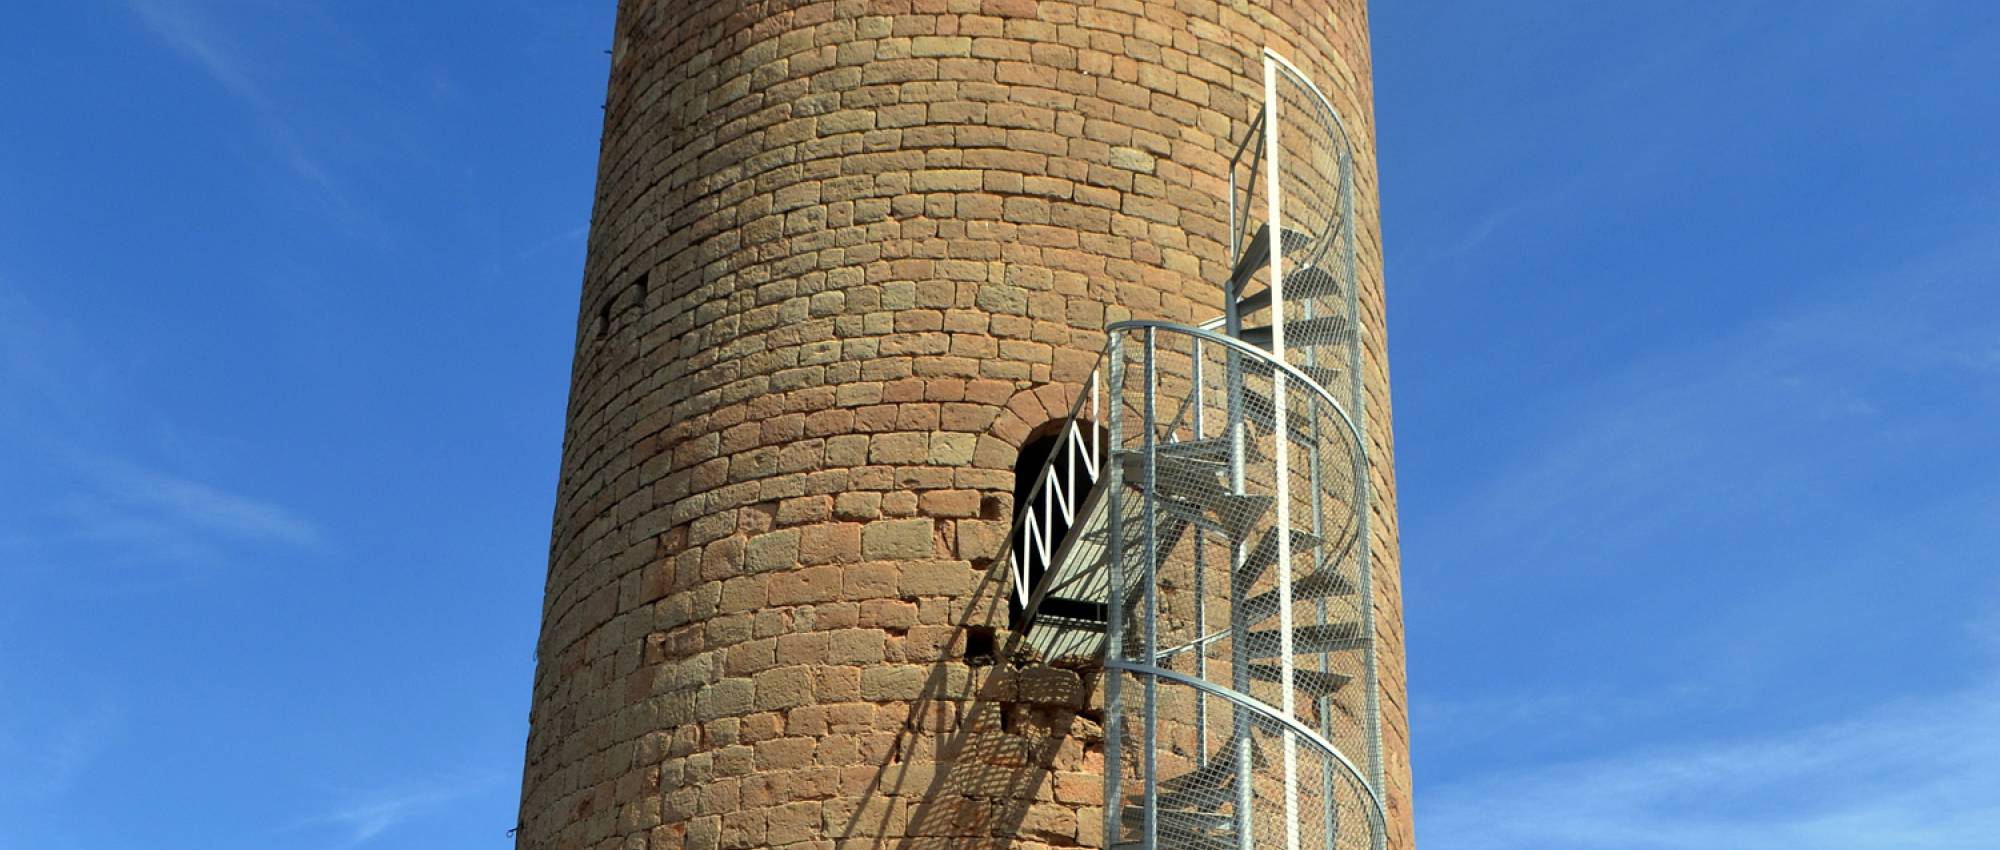 The Manresana Tower. Angela Llop / Wikimedia Commons. CC BY-SA 2.0